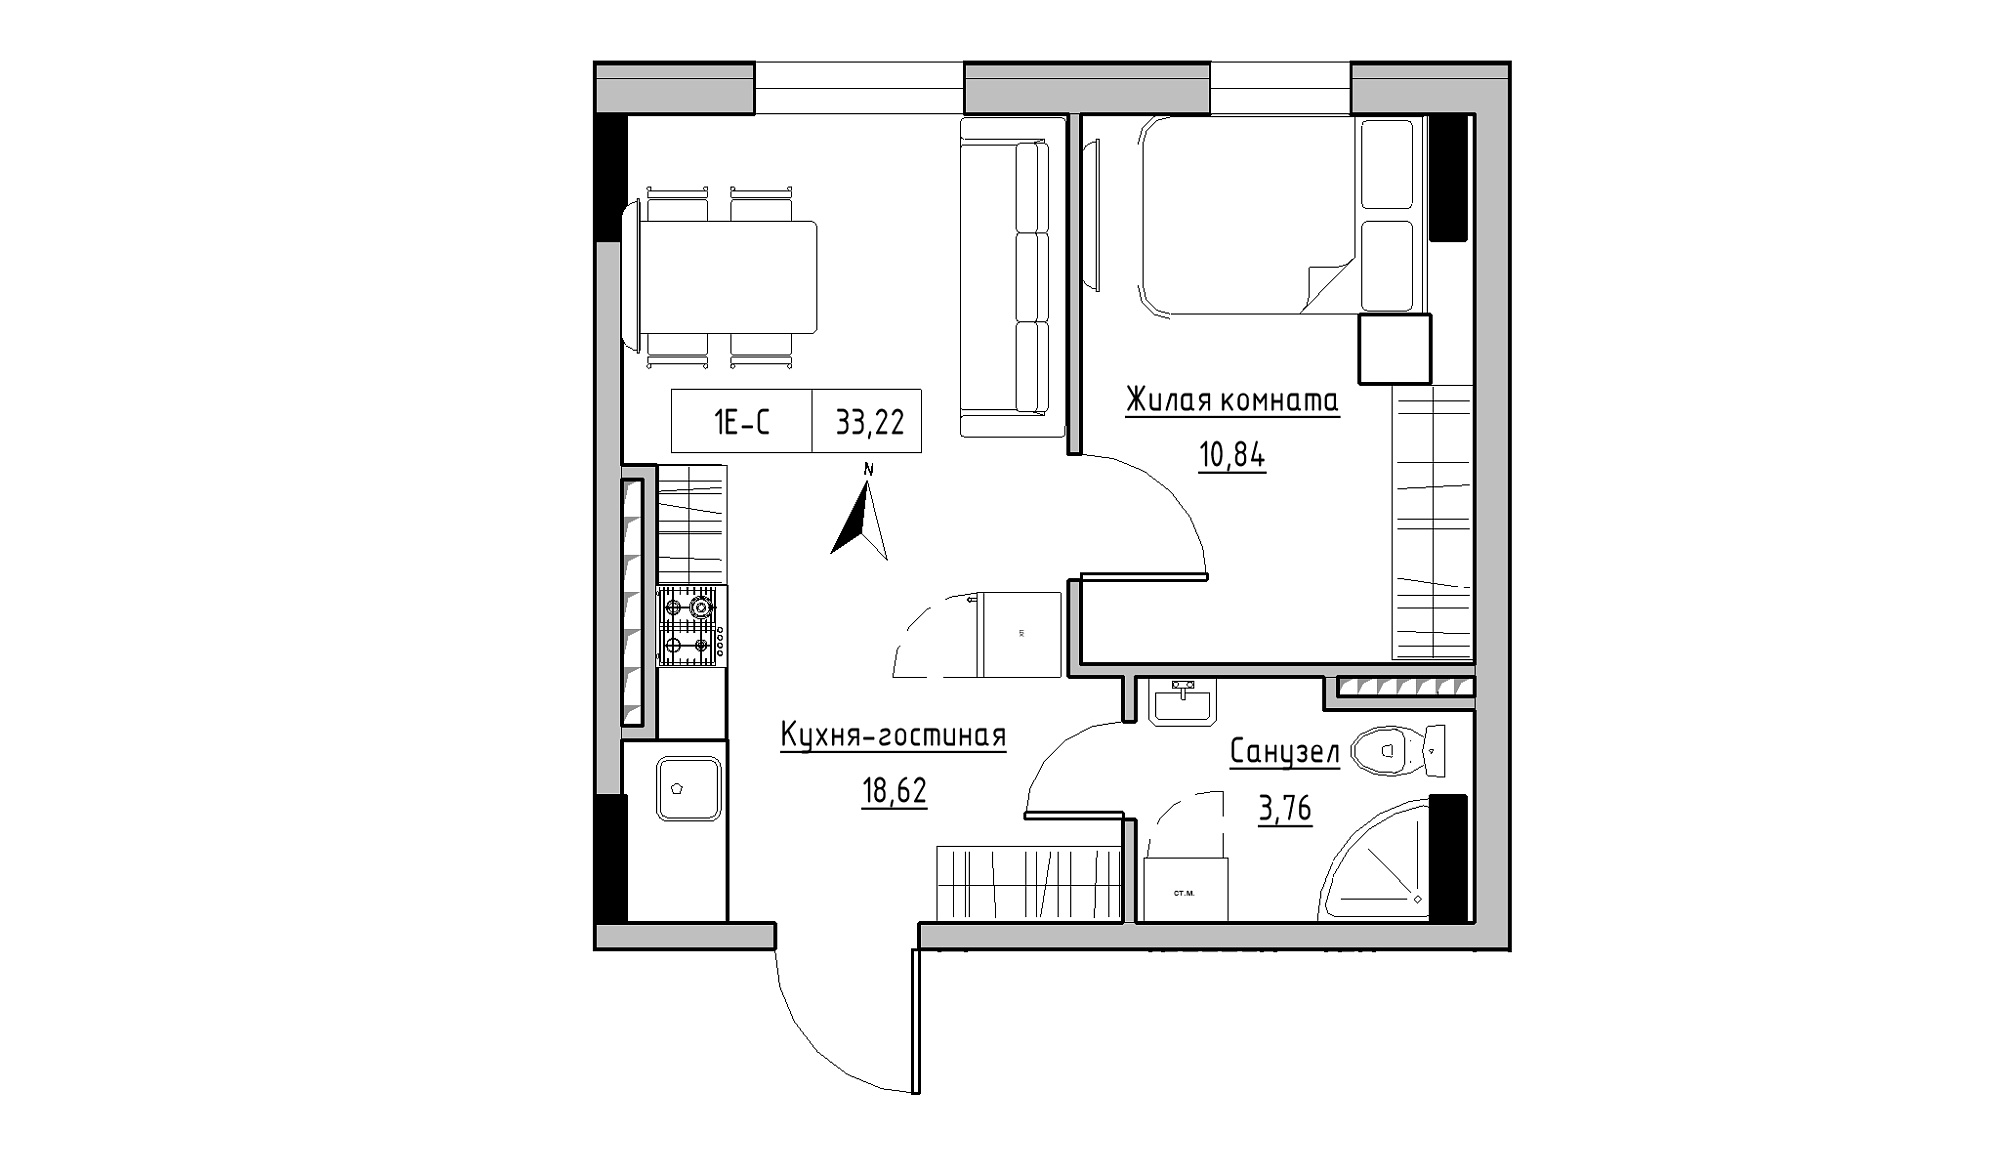 Planning 1-rm flats area 33.22m2, KS-025-05/0011.